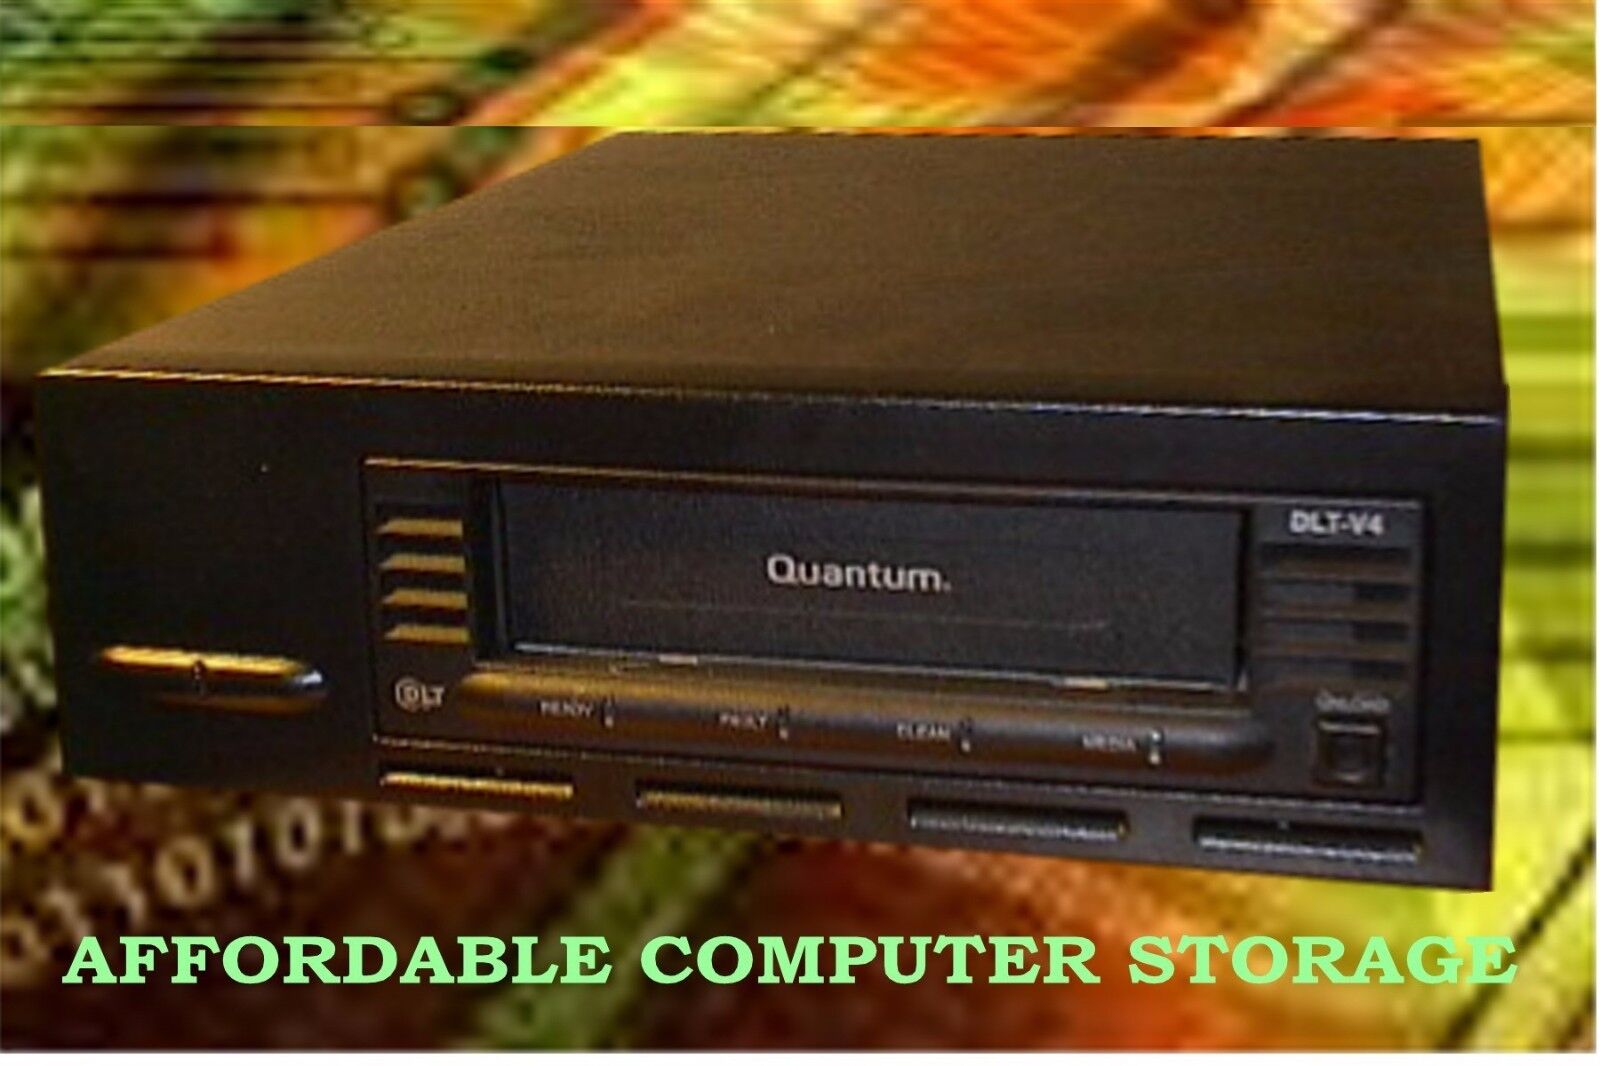 Quantum tape drive EXTERNAL DLT-V4e LVD 320Gb DLT-V4 HH SCSI BHBBX-EY